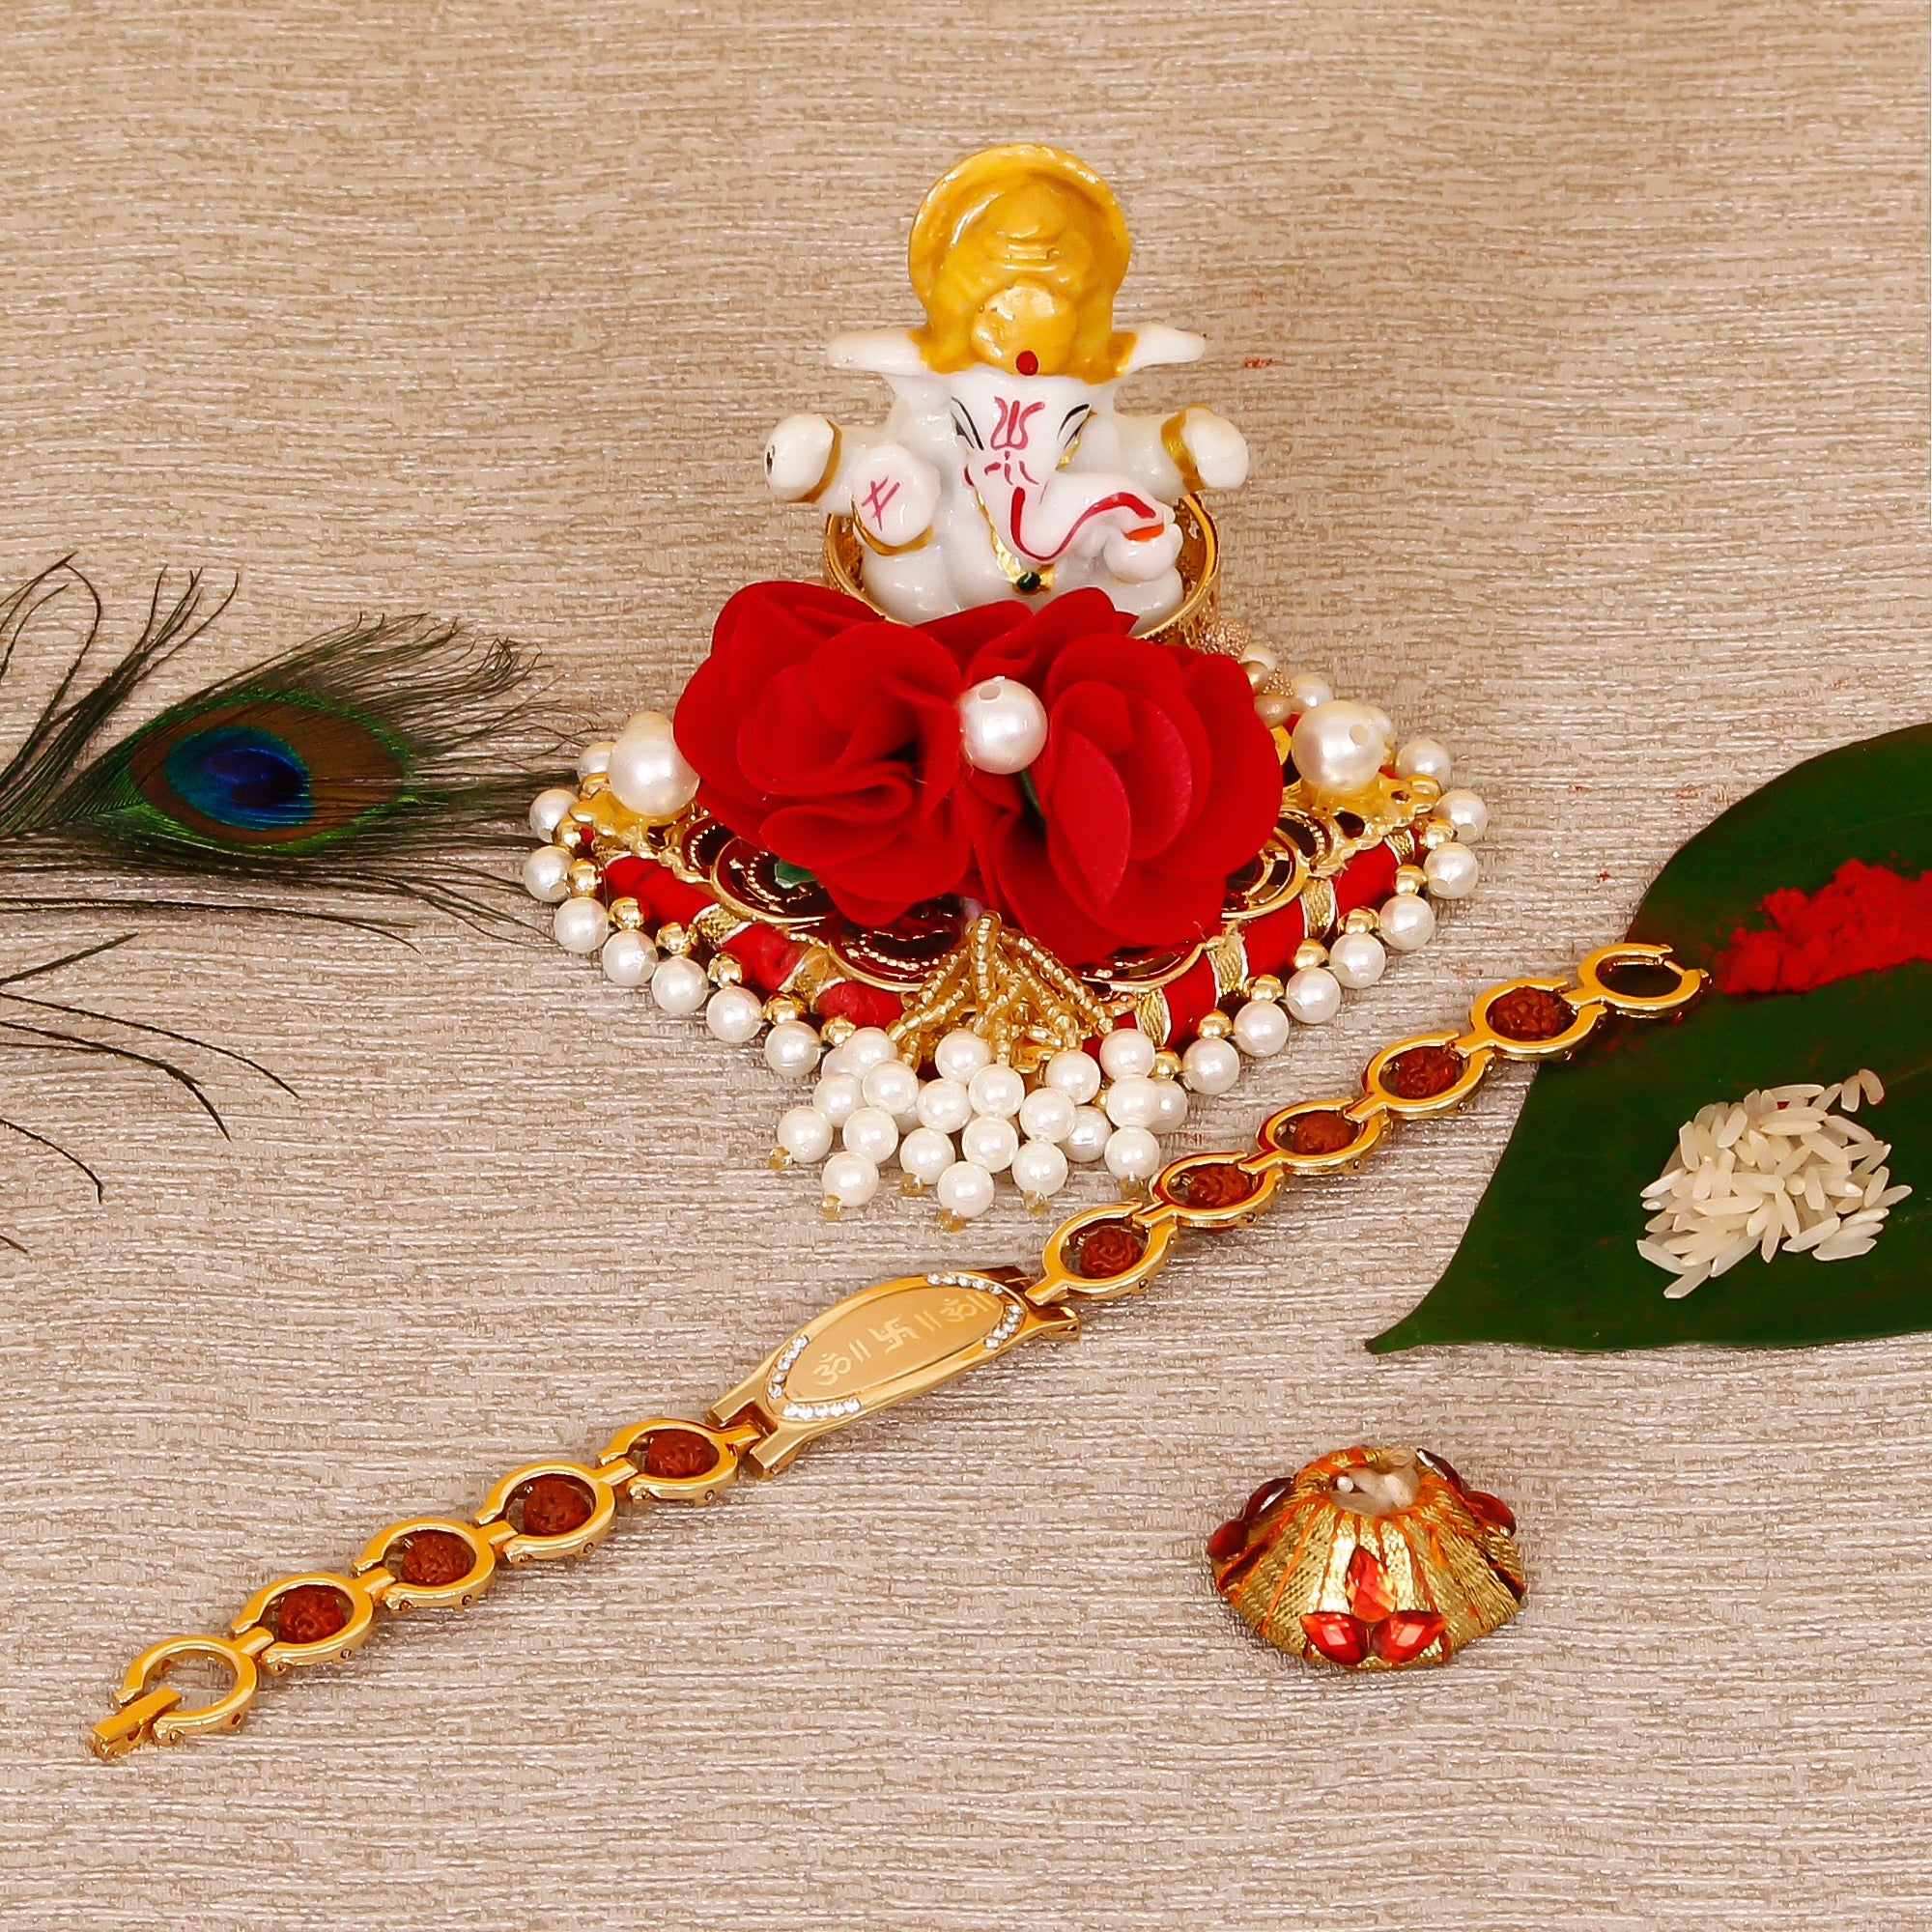 Designer Bracelet Religious Rakhi with Lord Ganesha Idol on Decorative Plate for Car & Home and Roli Tikka Matki